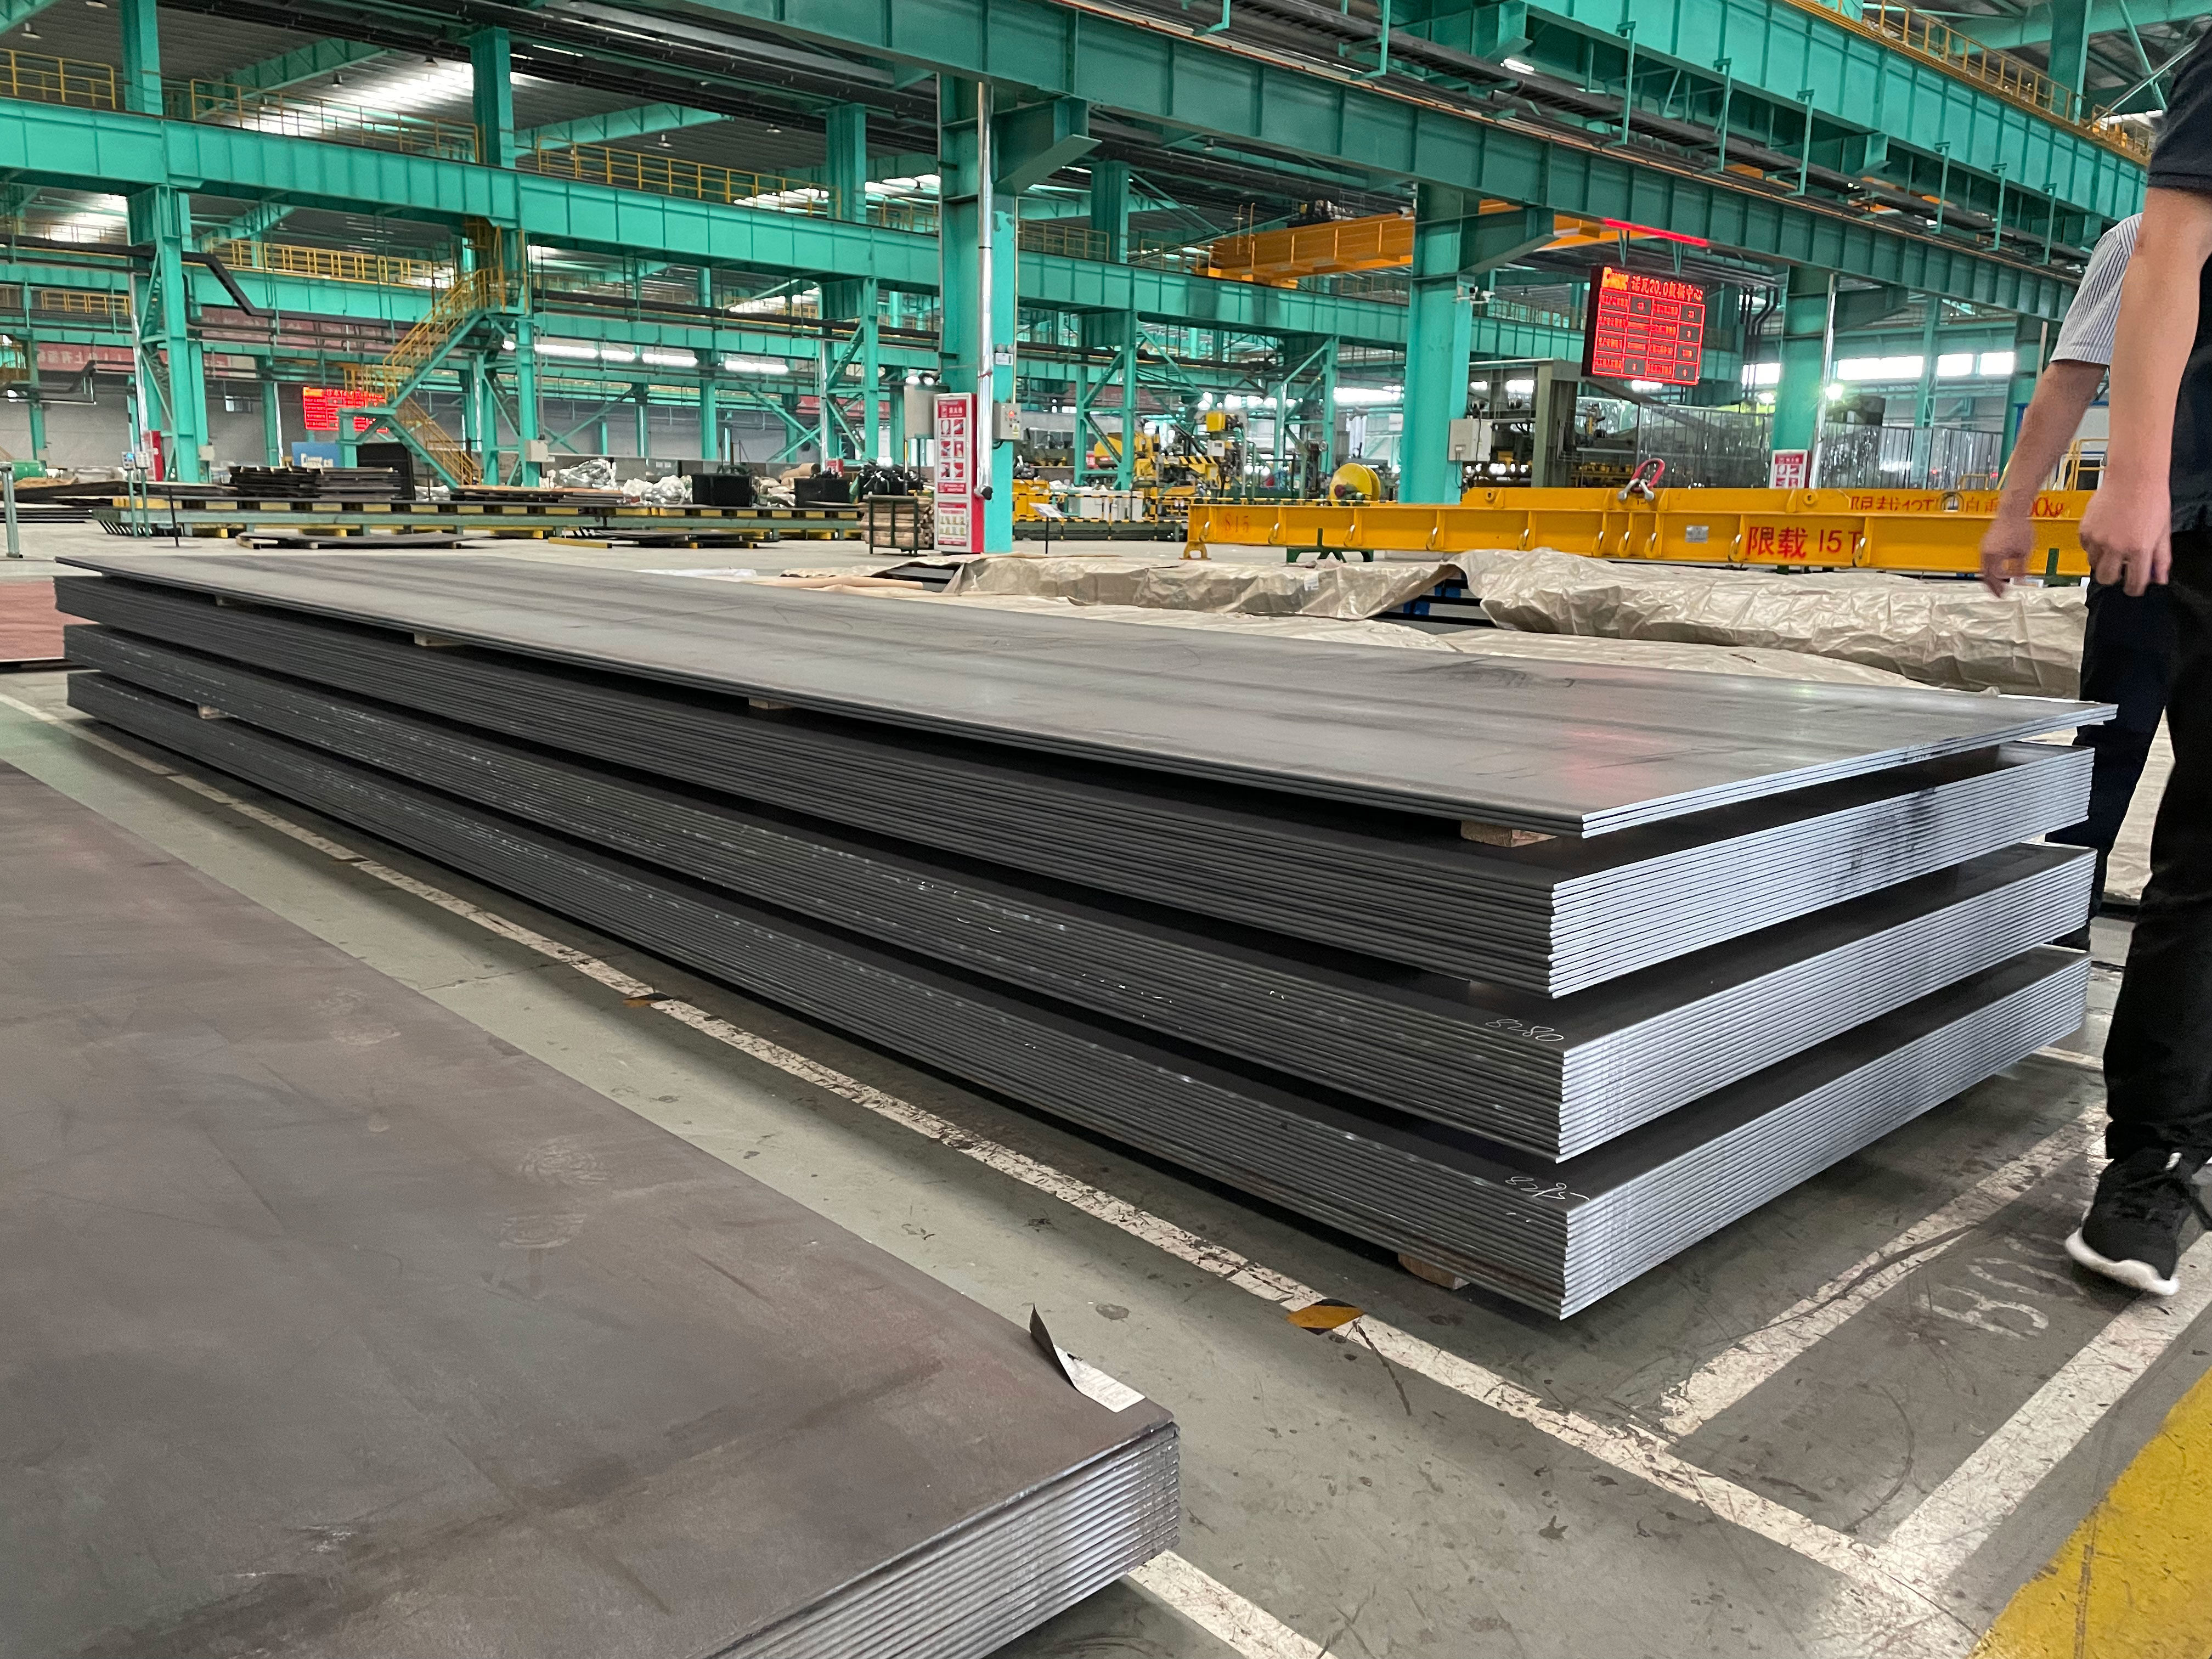 Shanghai Zhongze Yi Metal Disassembly Co., Ltd. superbus est productum - laminam carbonii ferro